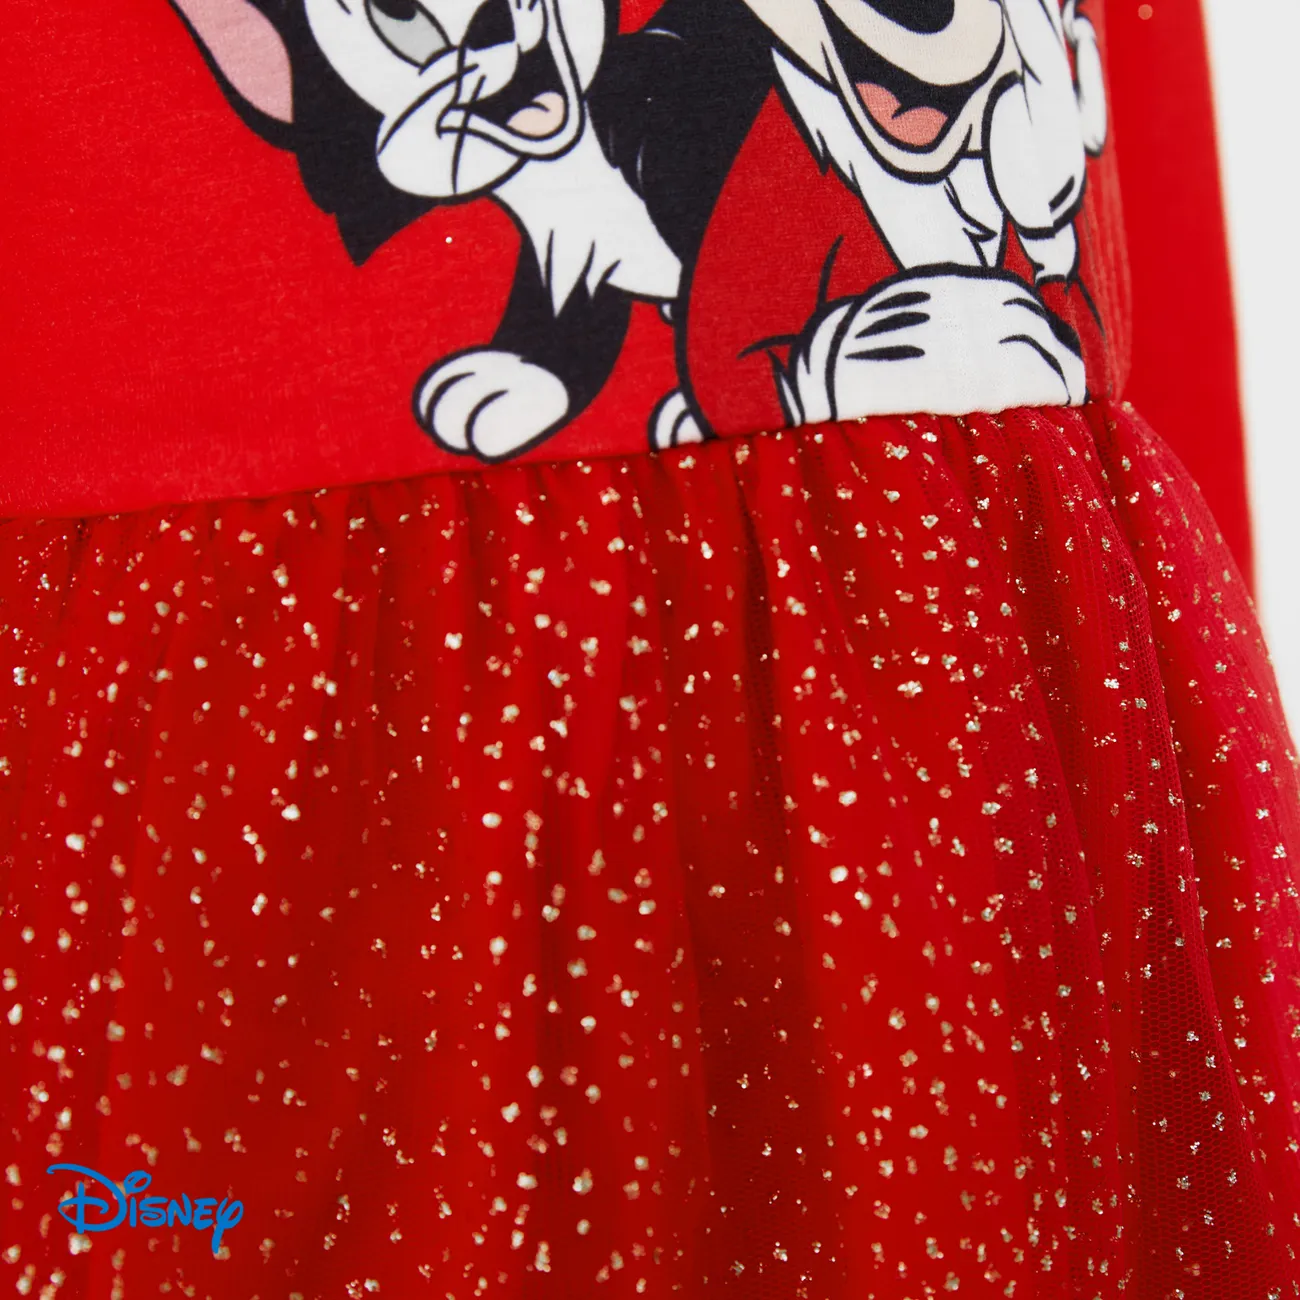 Disney Mickey and Friends Noël Enfant en bas âge Fille Couture de tissus Enfantin Robes Rouge big image 1